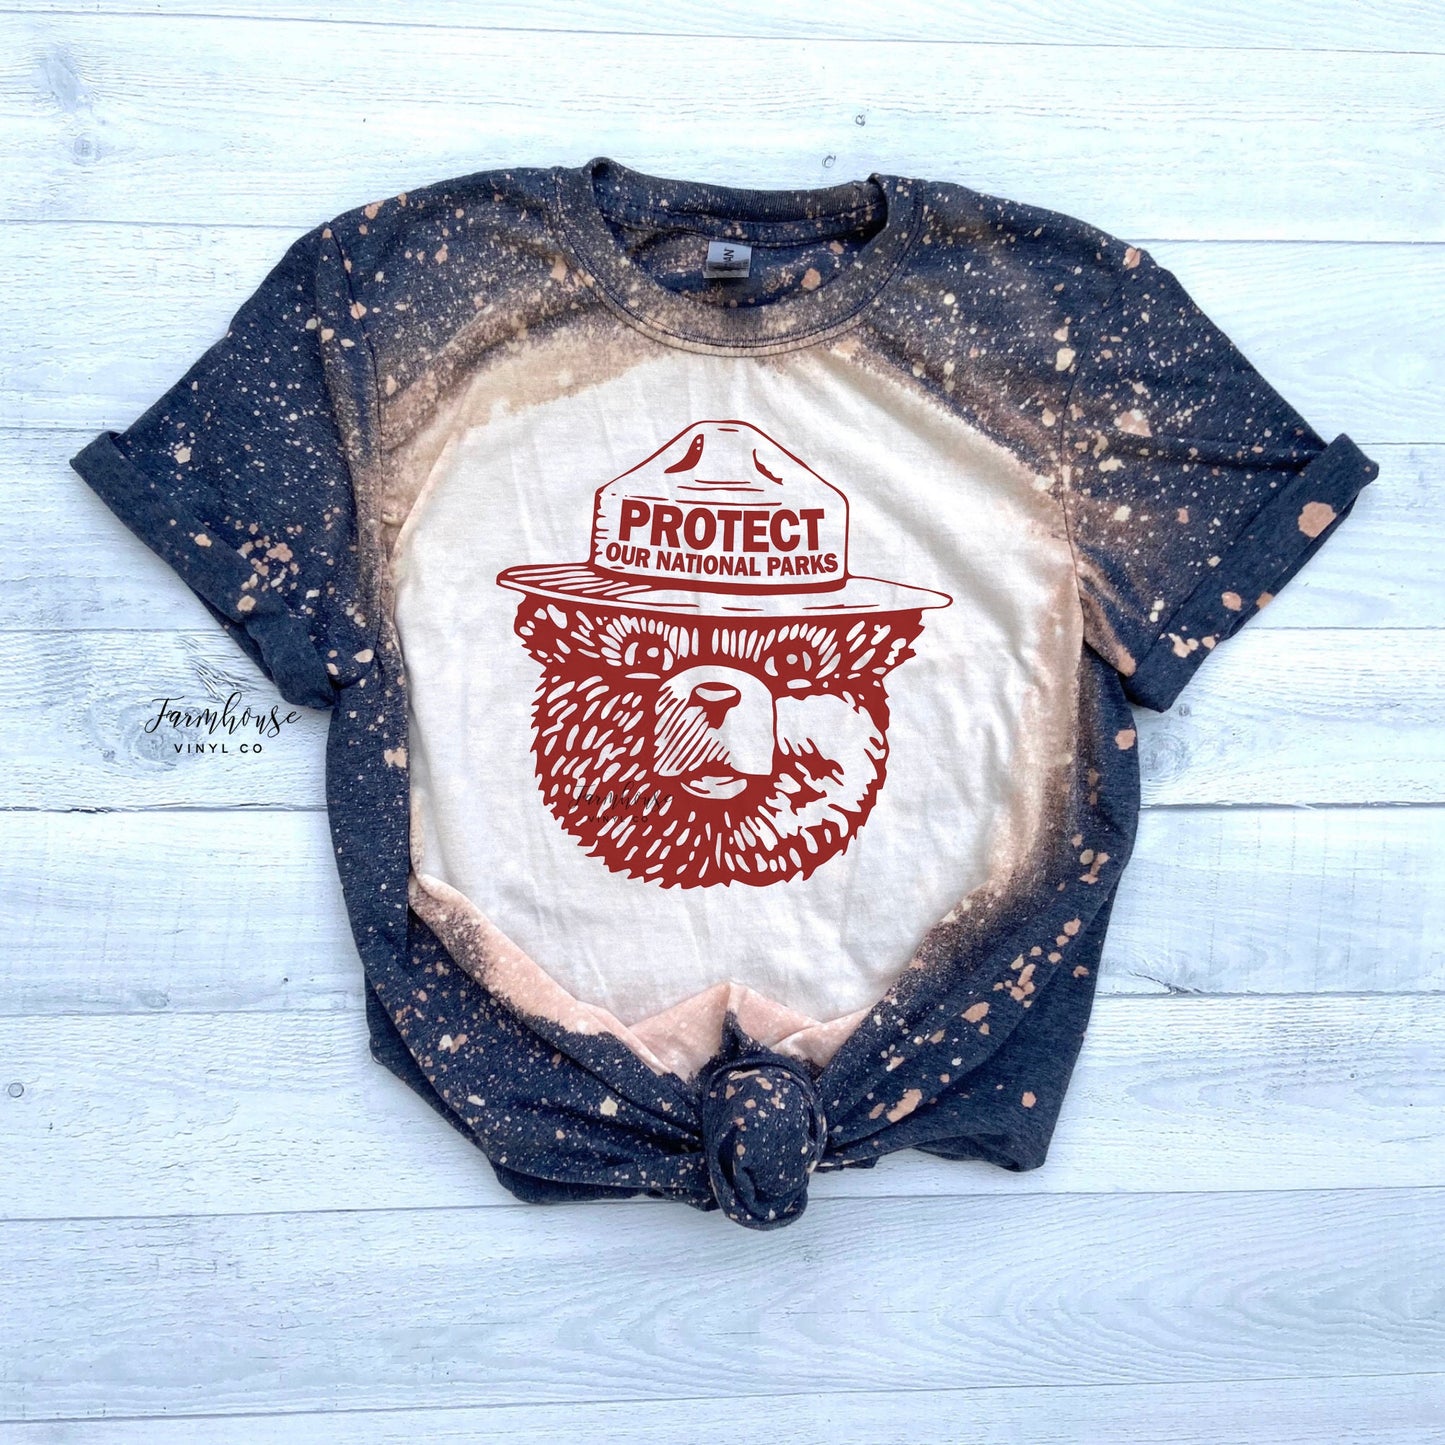 Protect Our National Parks Bleached Shirt / Smokey / Summer Vacation Shirts / NP Souvenir Shirt / Camping Road Trip / Lets Take A Roadtrip - Farmhouse Vinyl Co